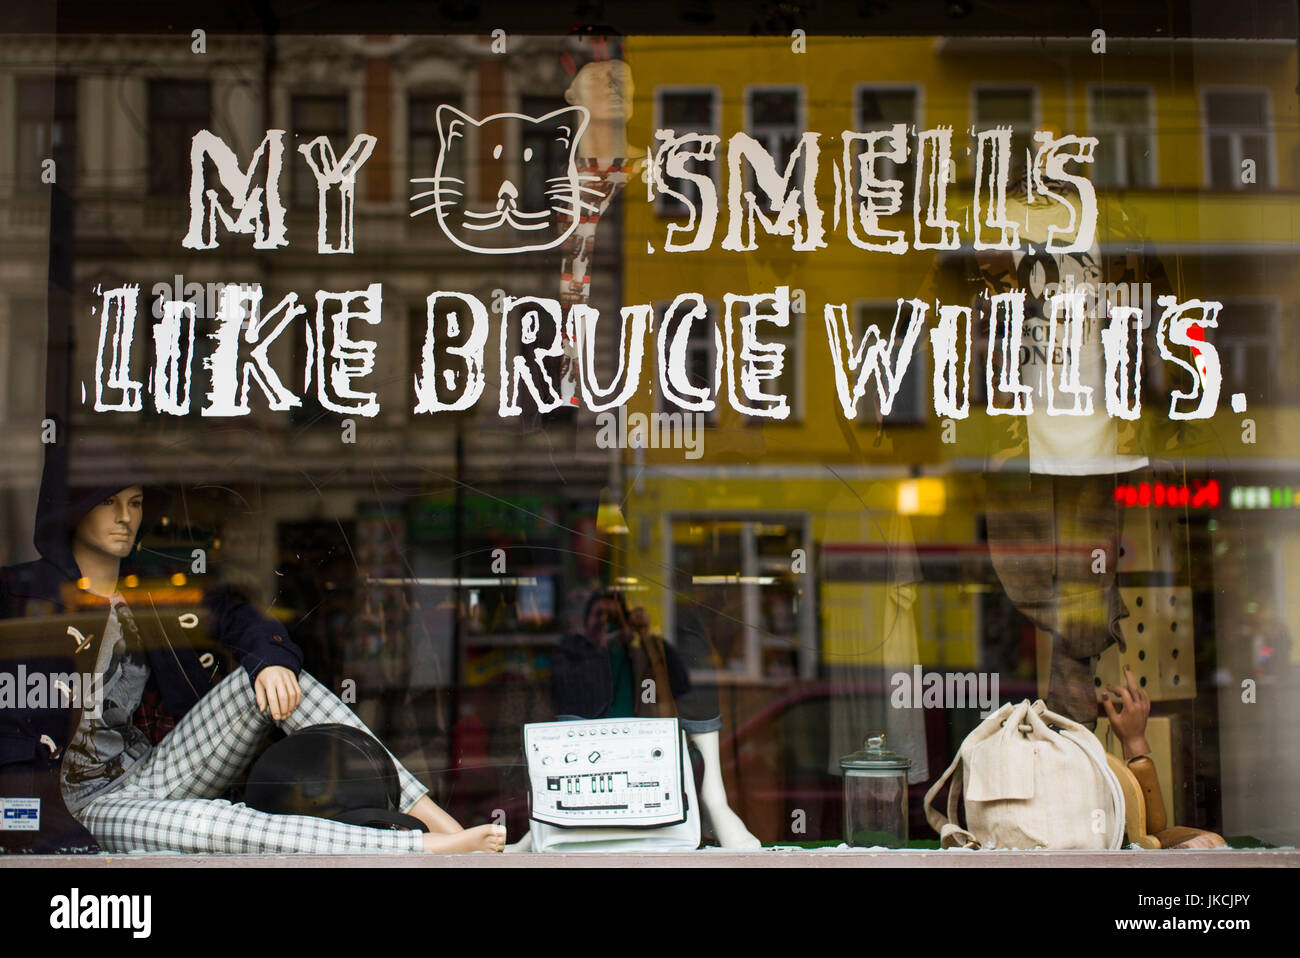 Germany, Berlin, Prenzlauer Berg, My Cat Smells Like Bruce Willis, shop sign Stock Photo